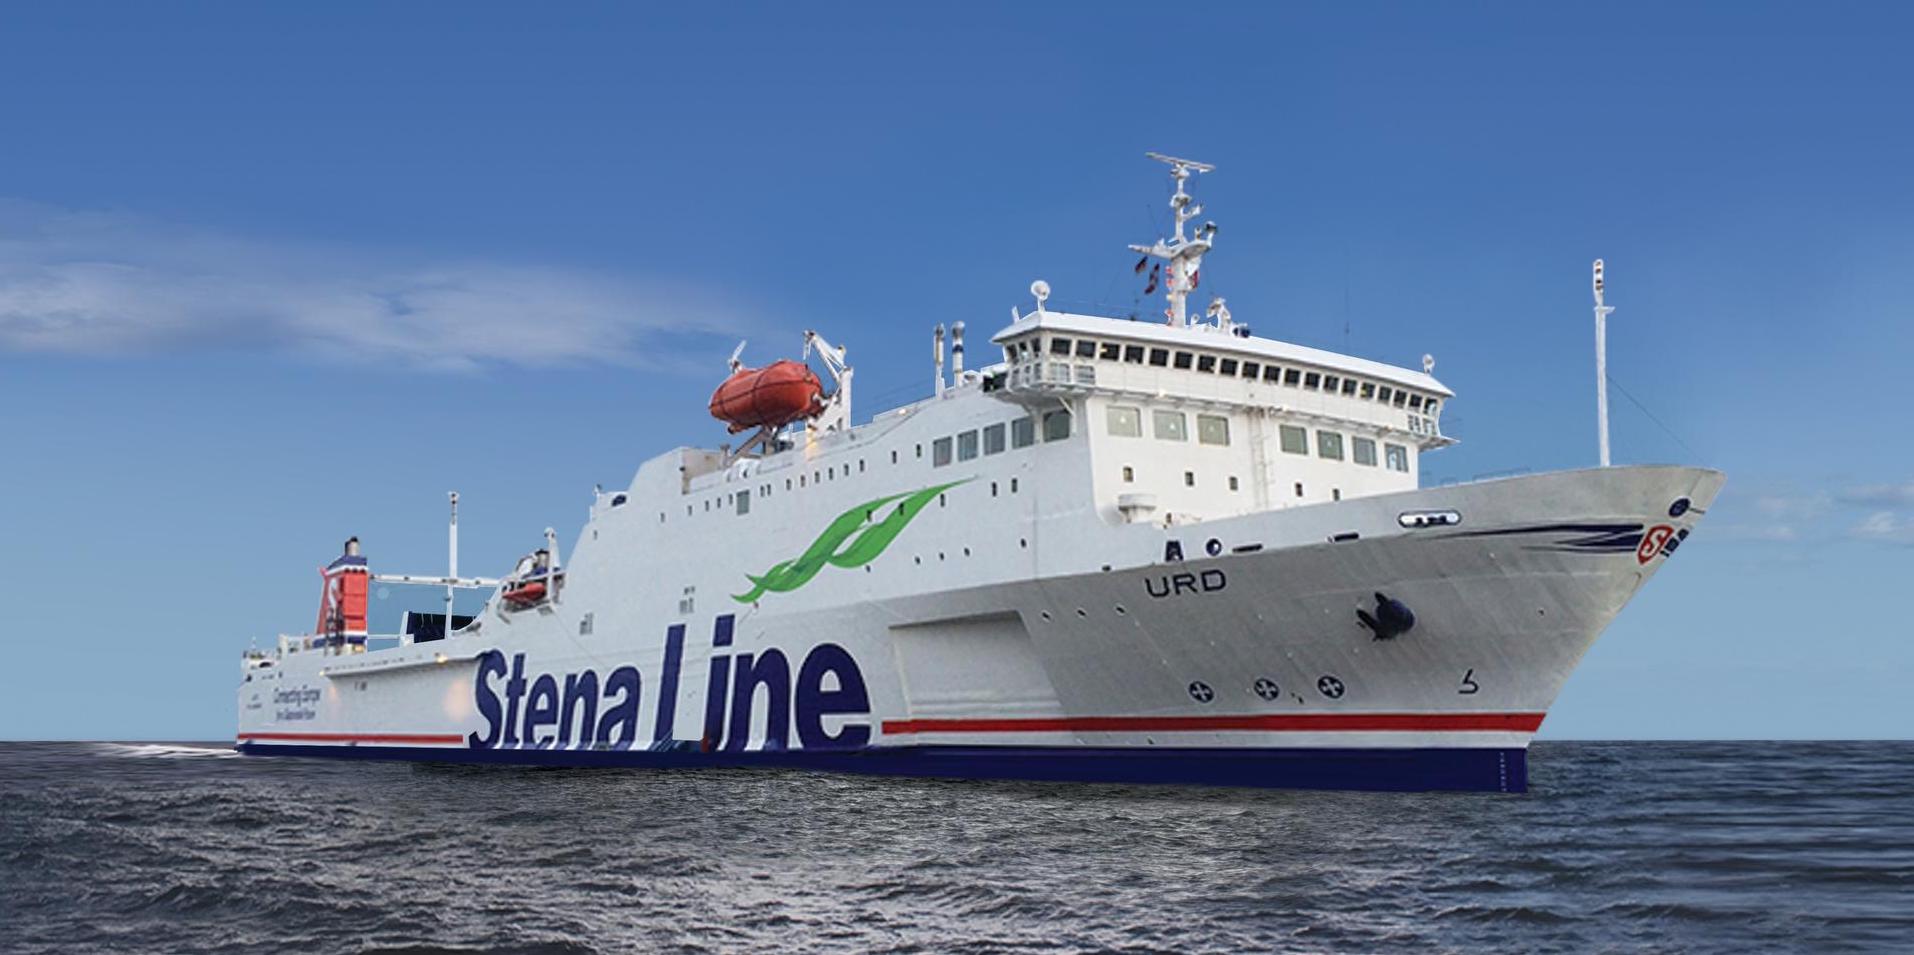 Stena Line - Urd 船の写真